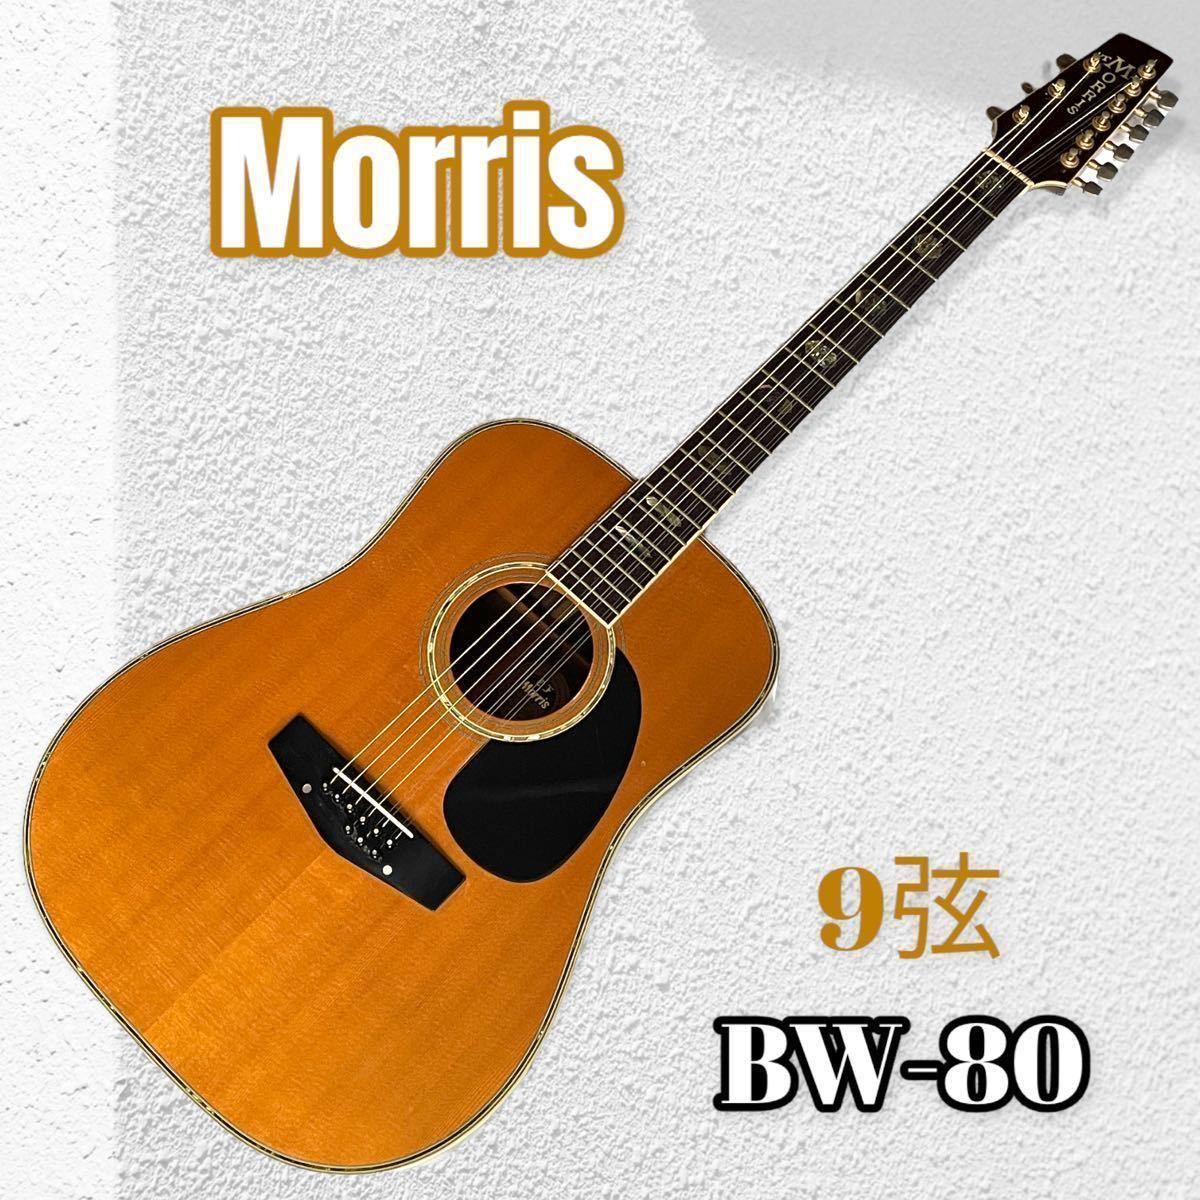 Yahoo!オークション - Morris モーリス BW-80 9弦 アコースティック...